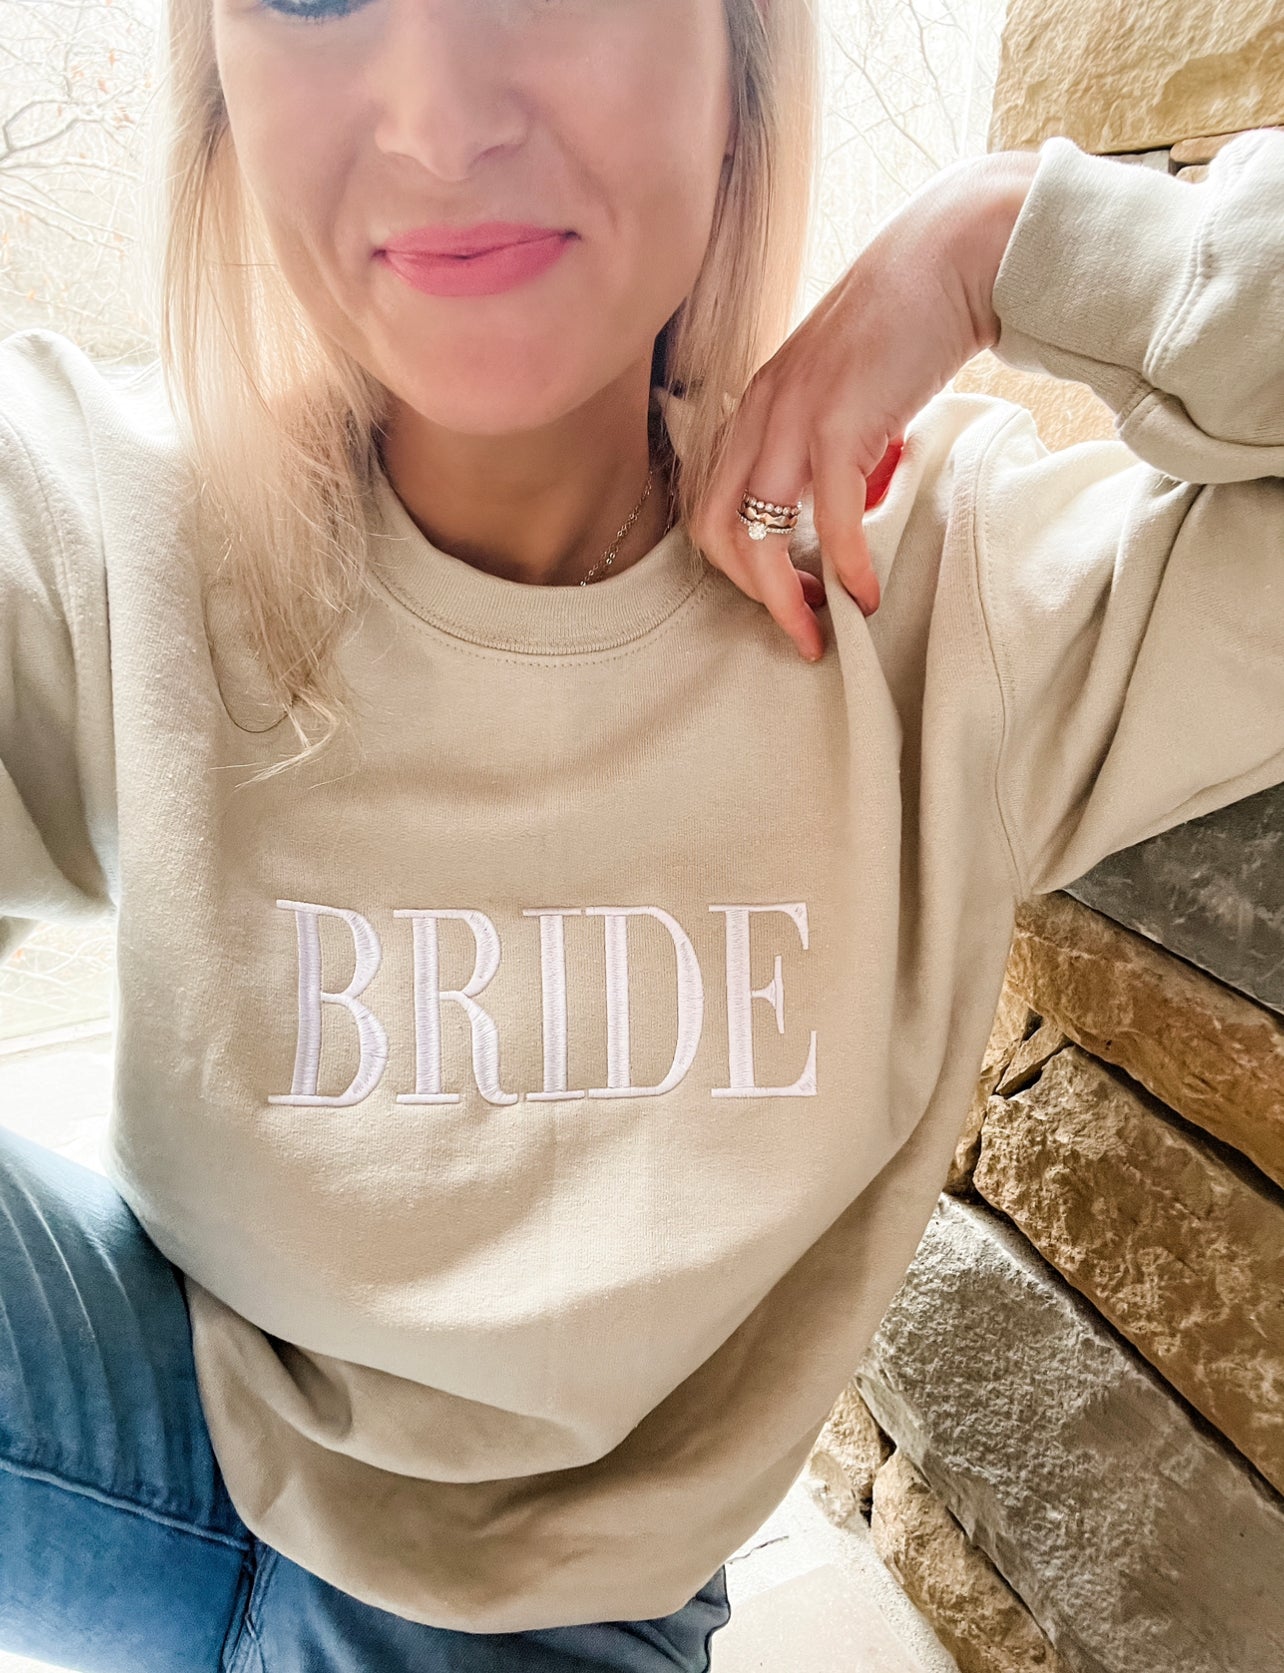 BRIDE Sweatshirt